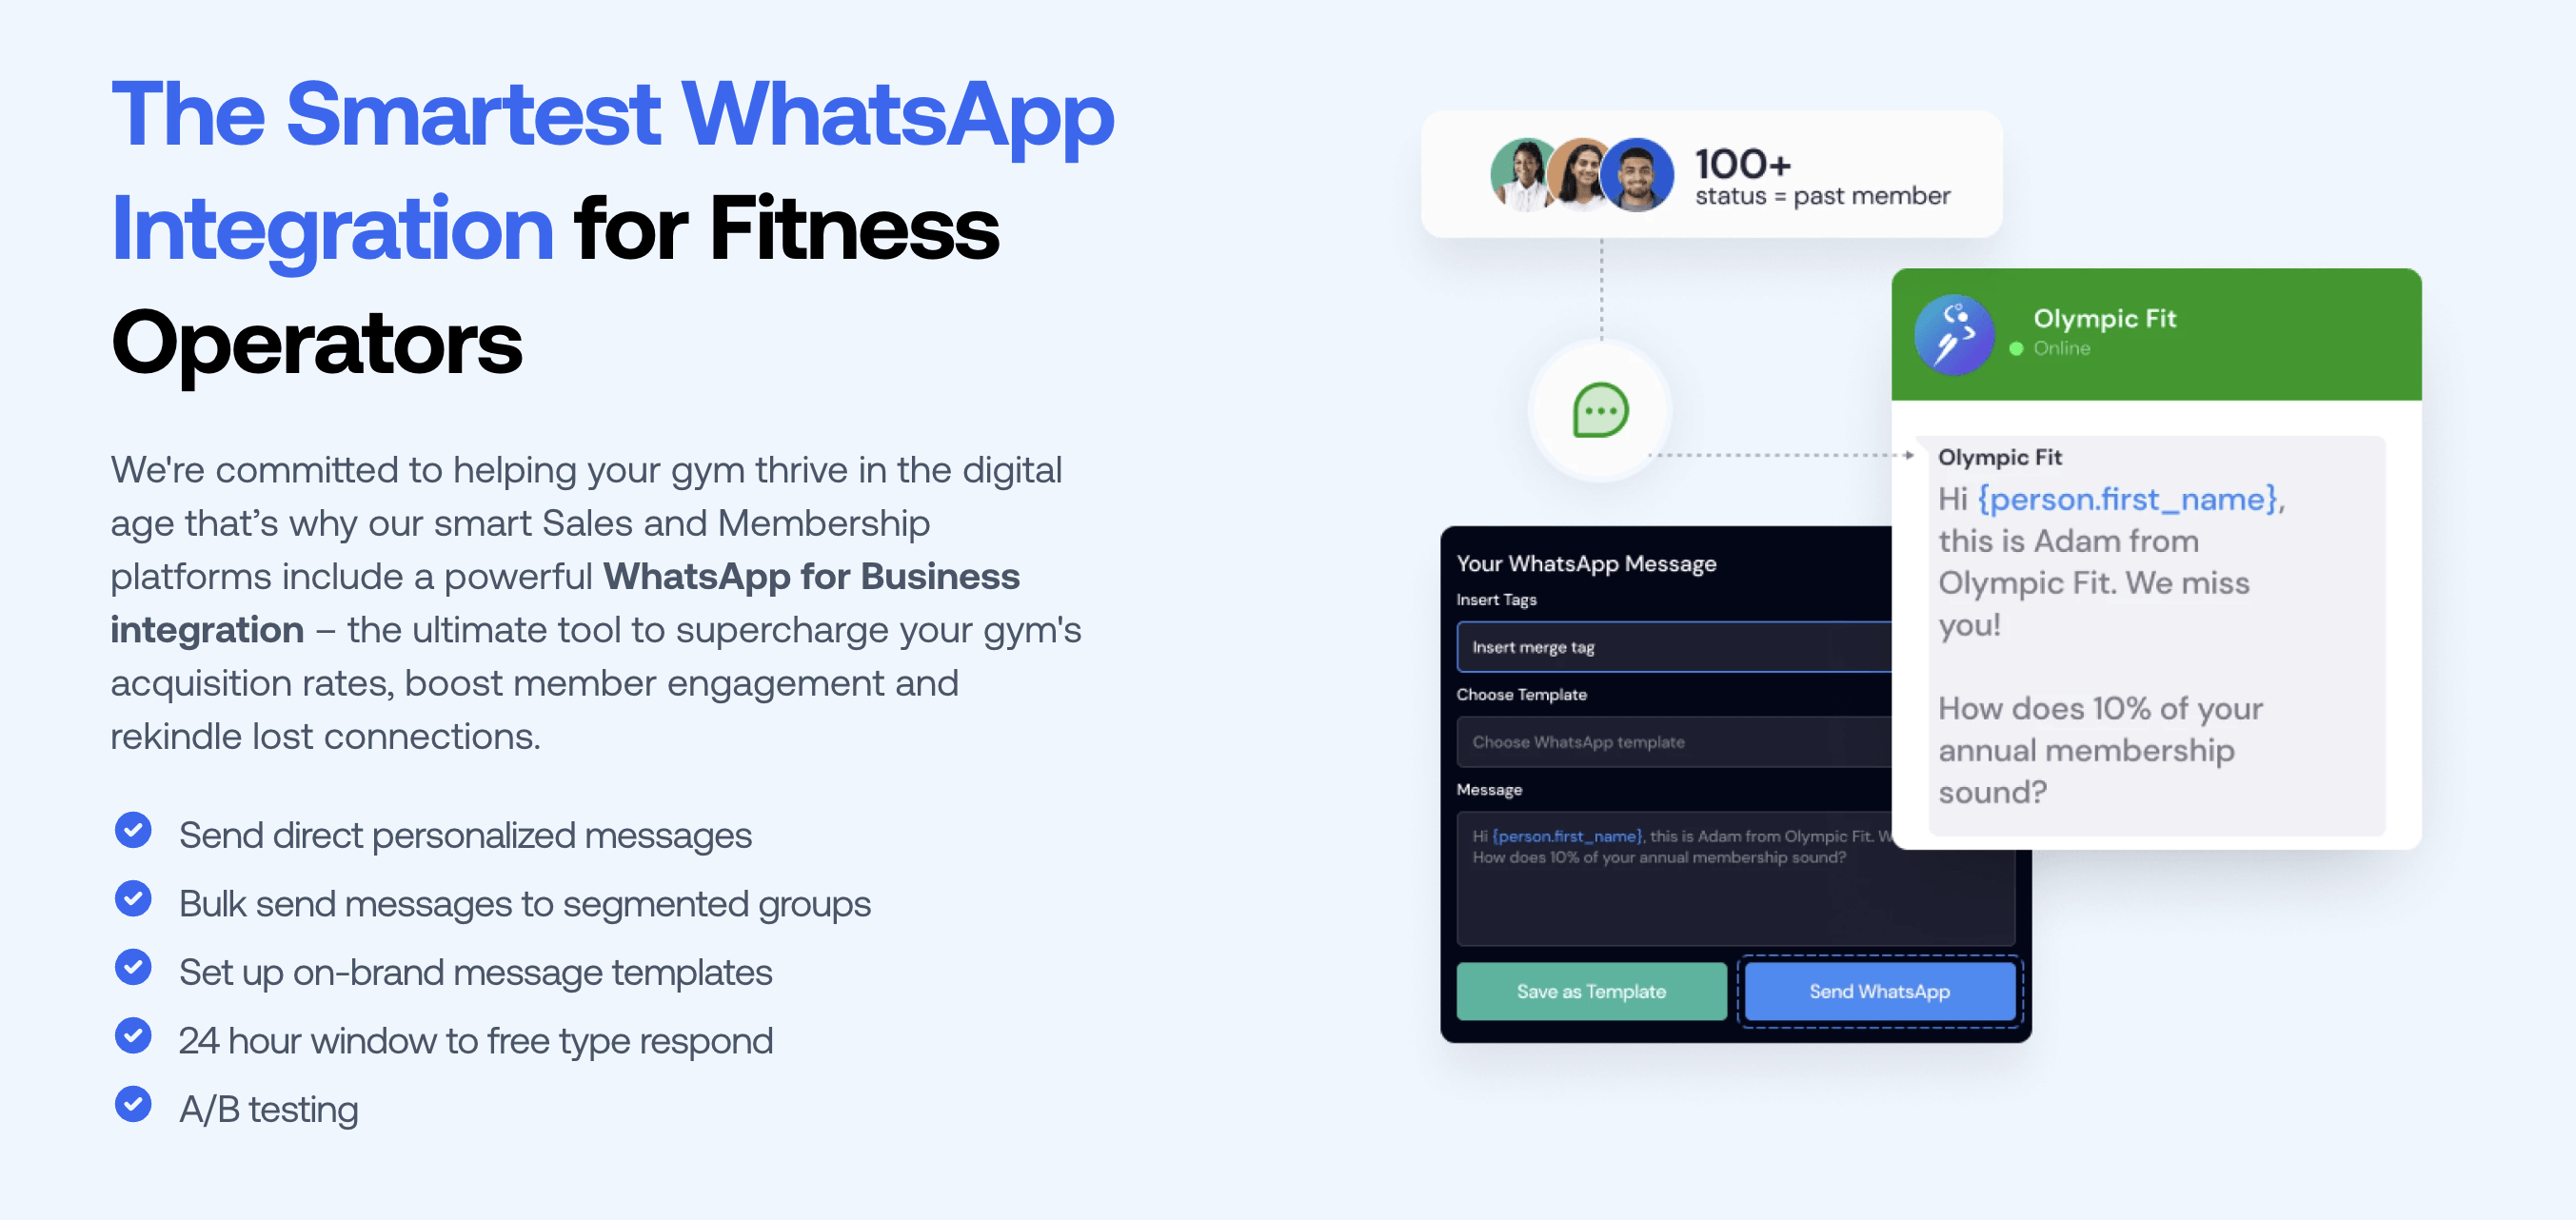 Keepme - The Smartest WhatsApp integration for fitness operators